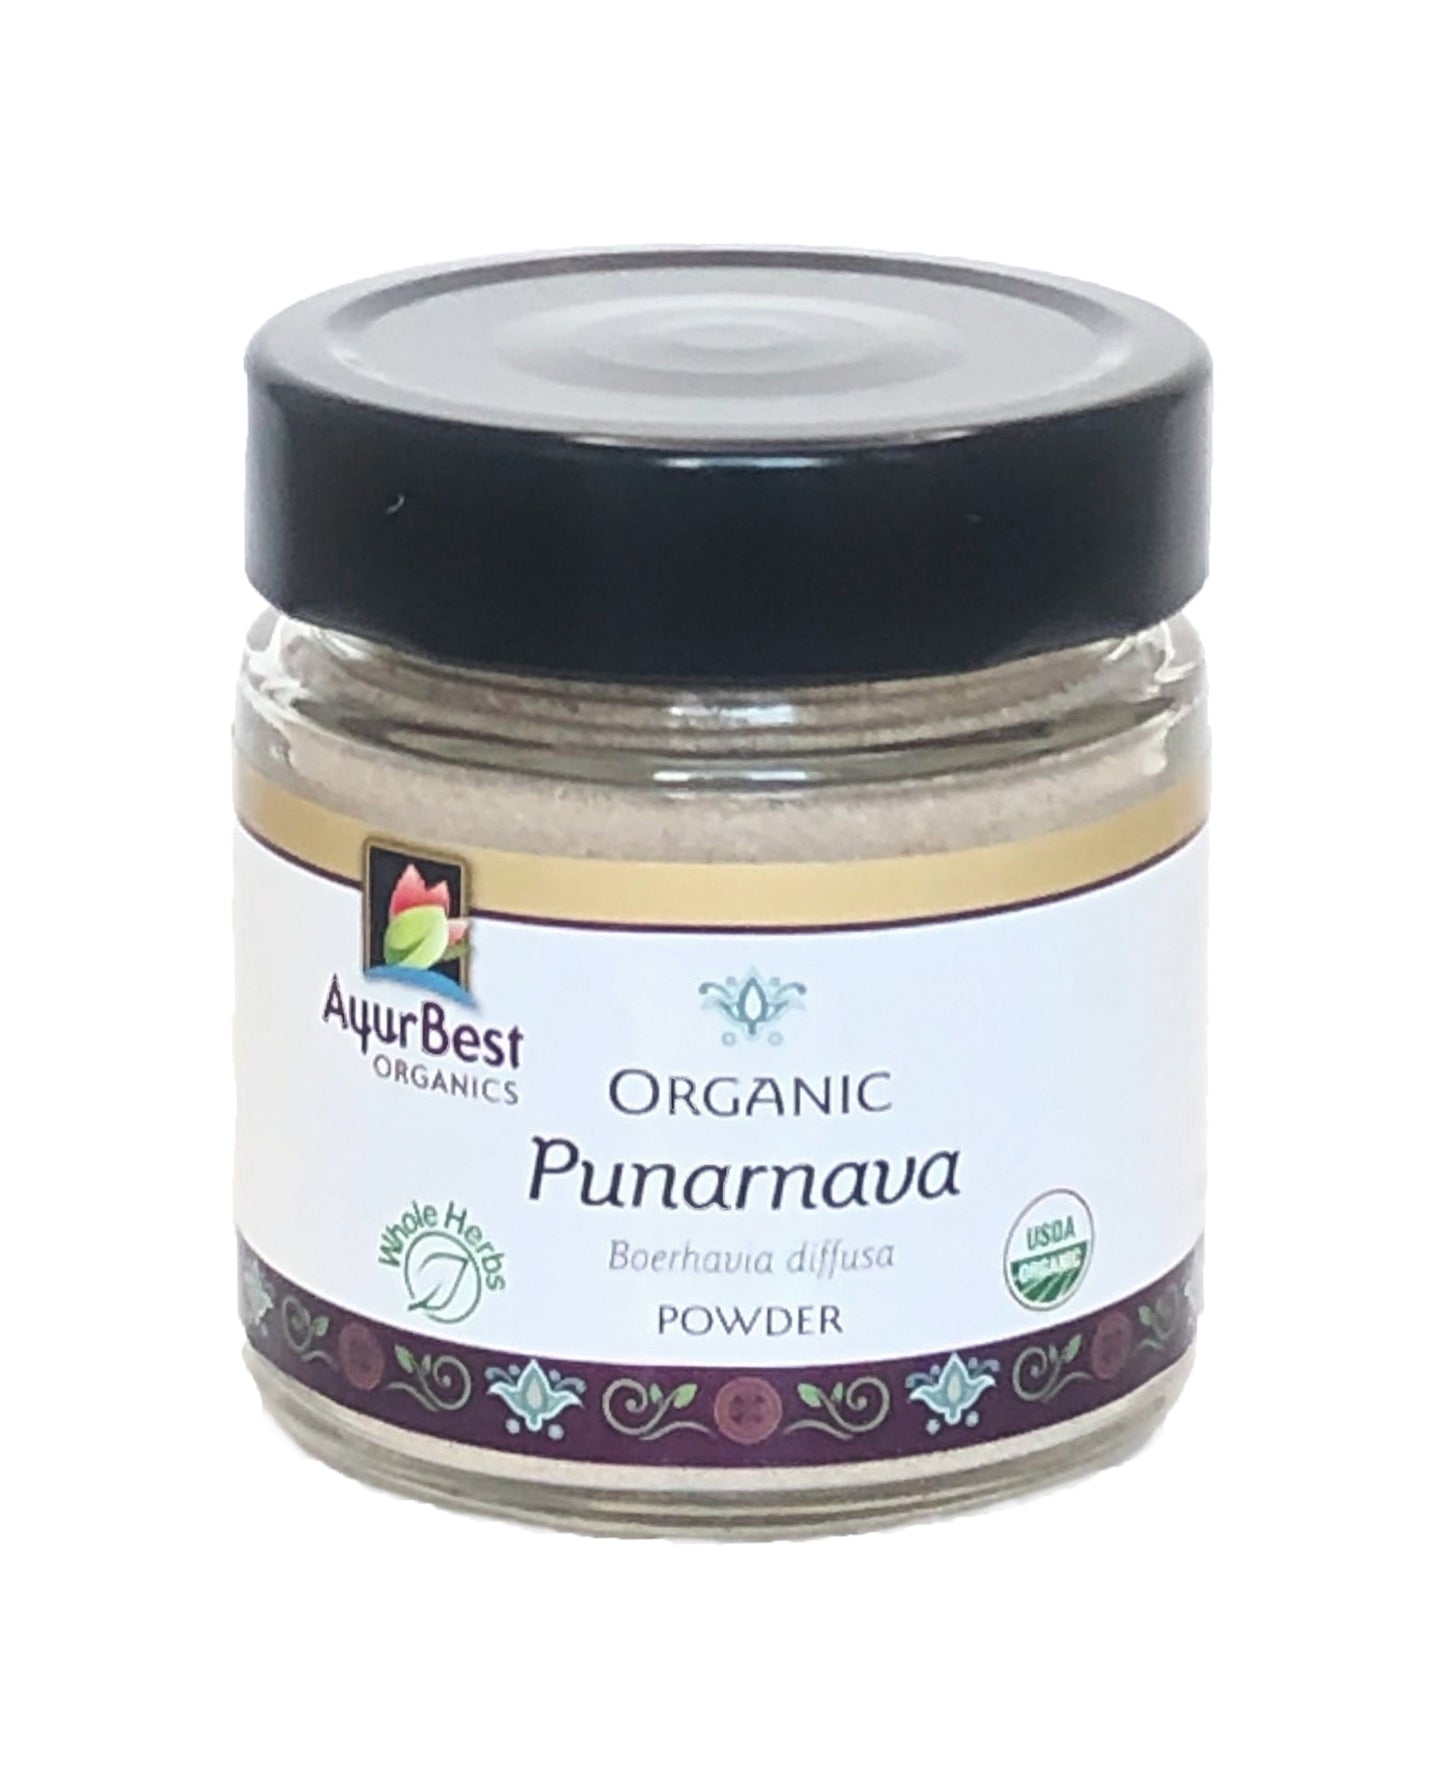 Wholesale Spices & Herbs - Punarnava Powder, Organic 3.2oz (91.3g) Jar